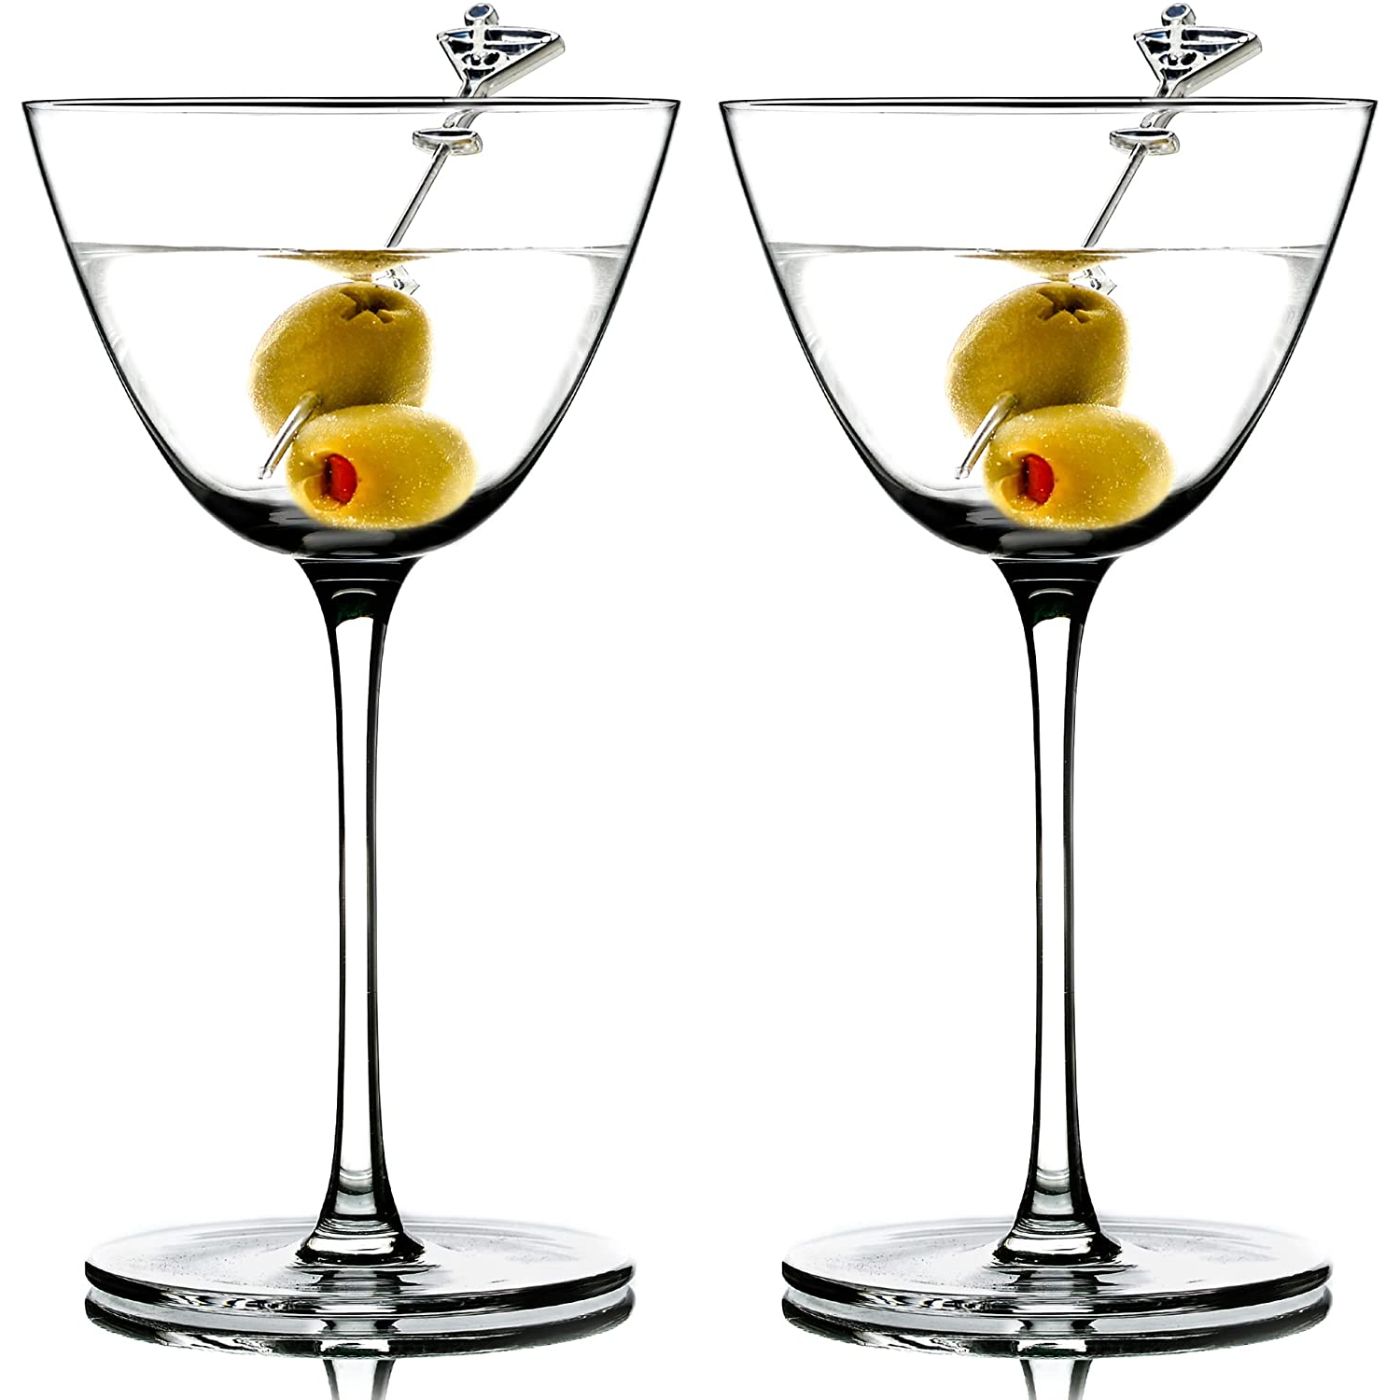 More - More Martini - Set of 2